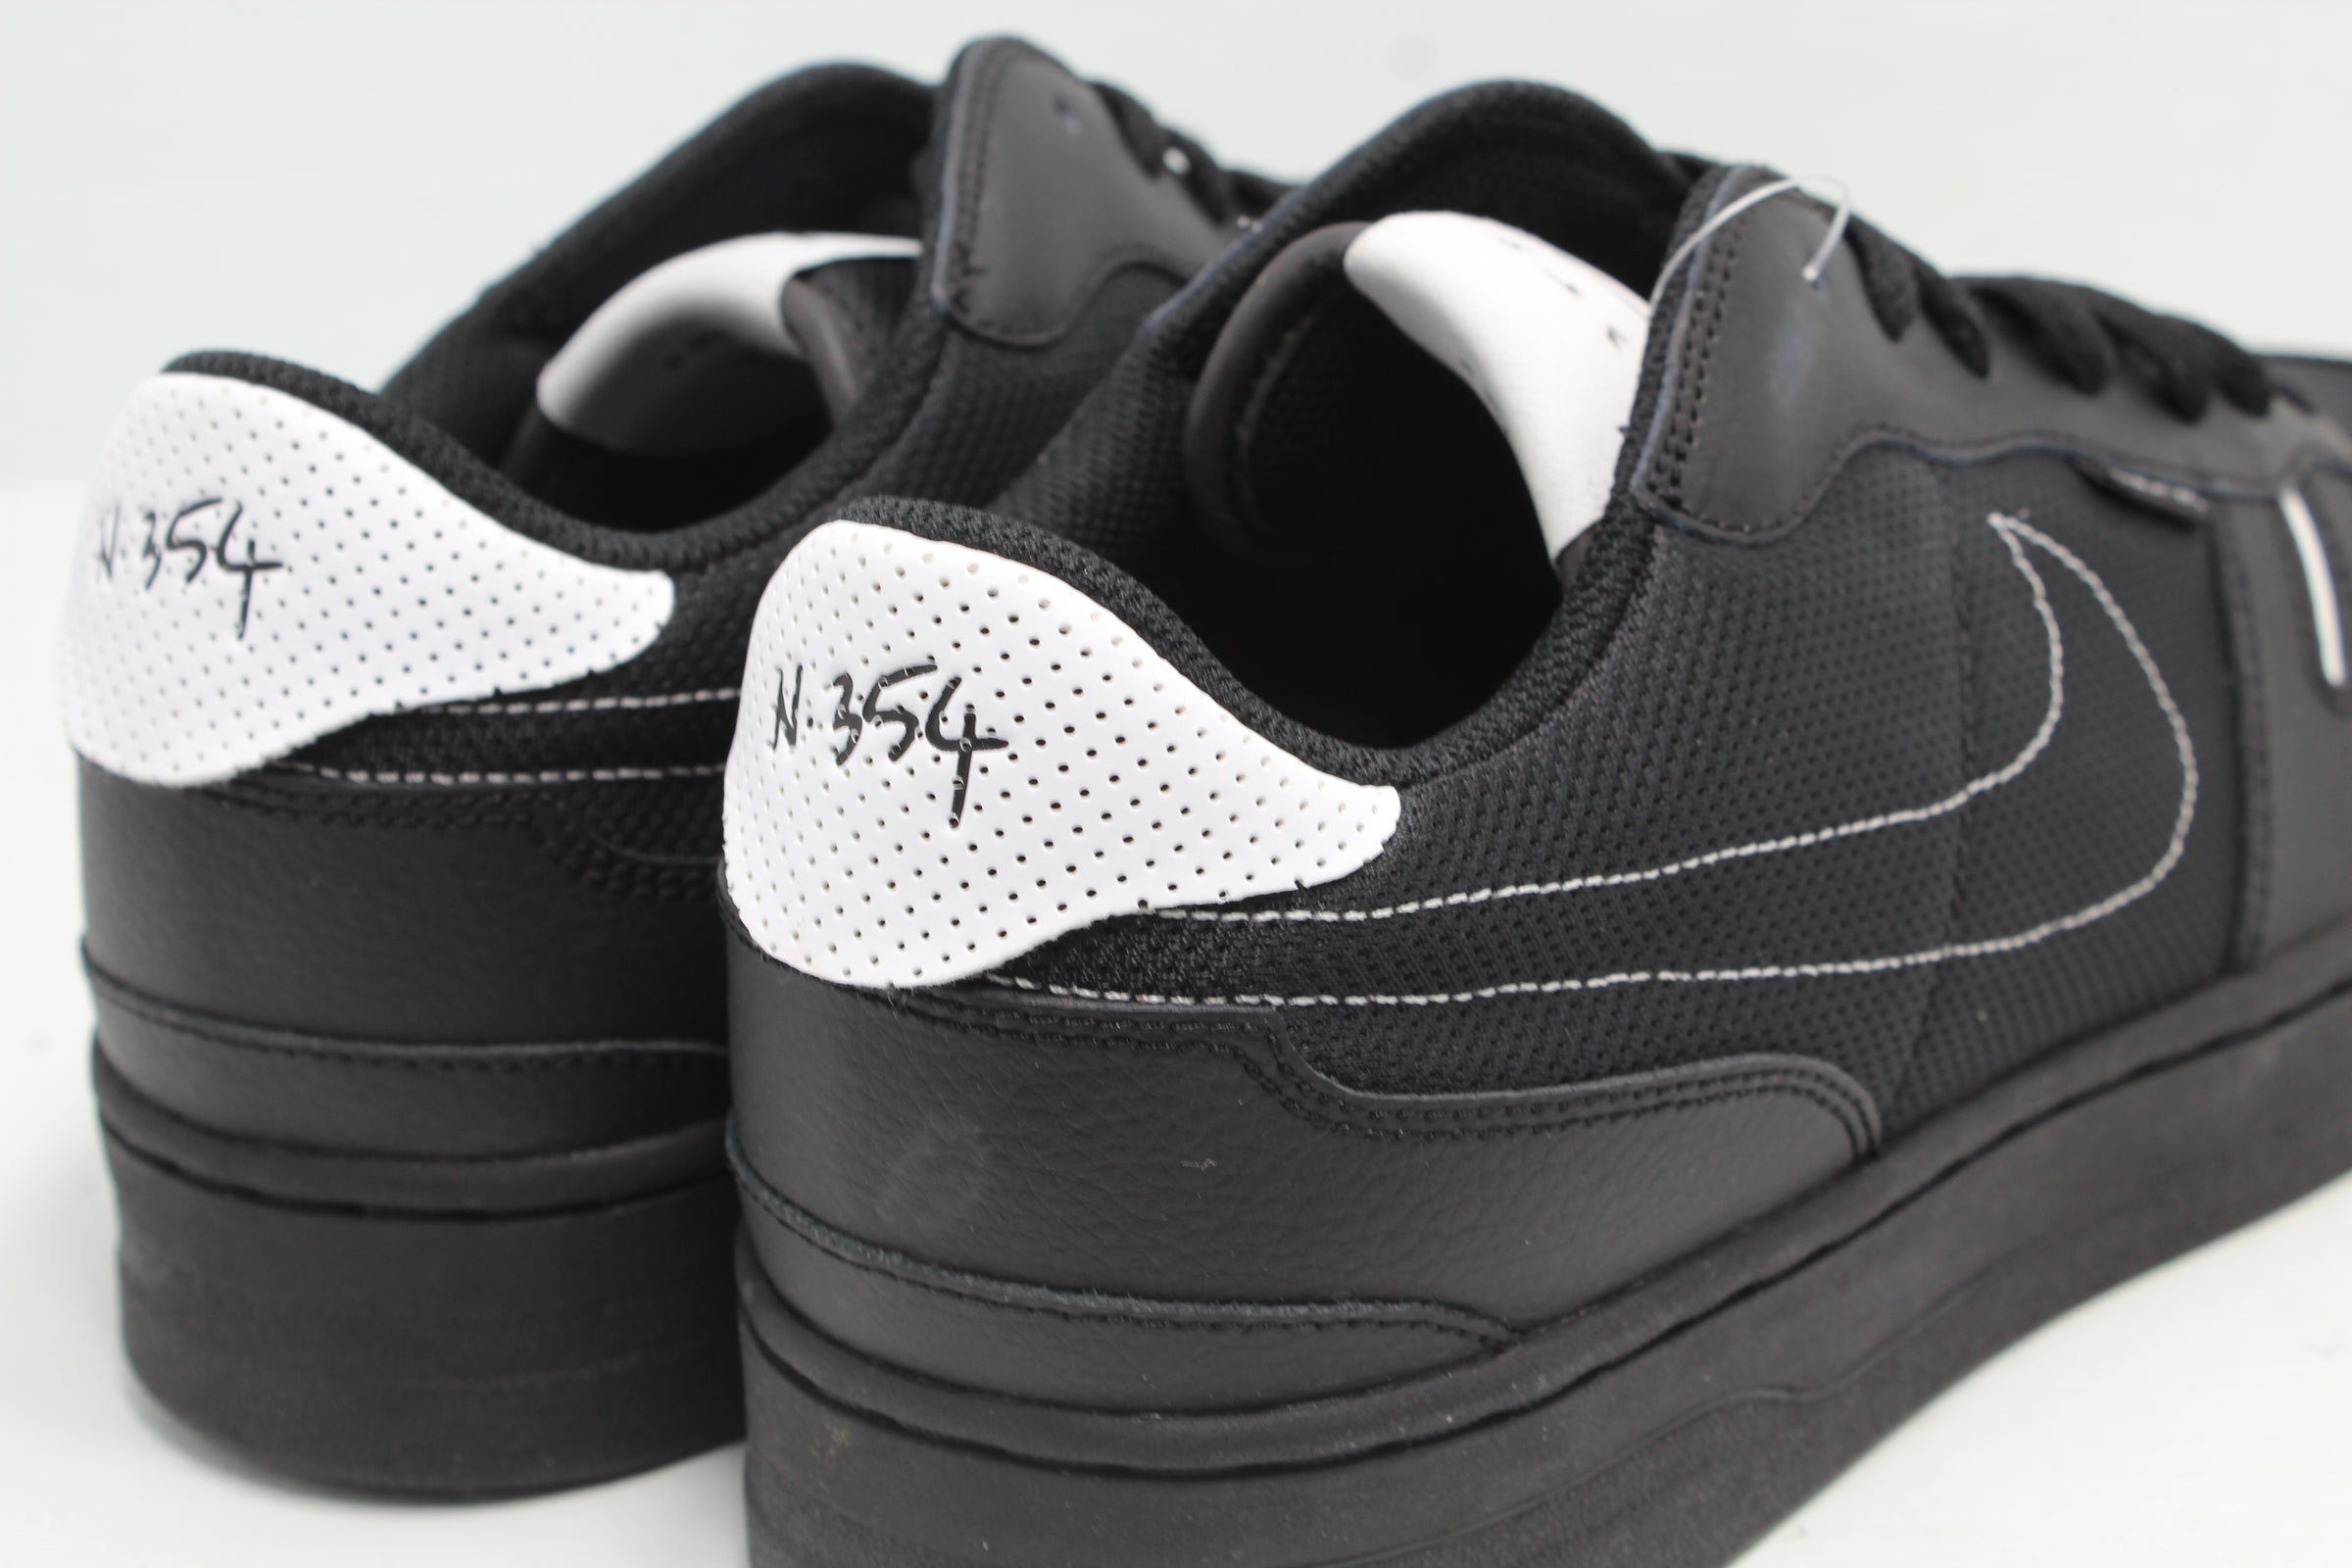 romantisch Oswald ingenieur Nike Squash Type Black White N.354 Sample | Hype Stew Sneakers Detroit